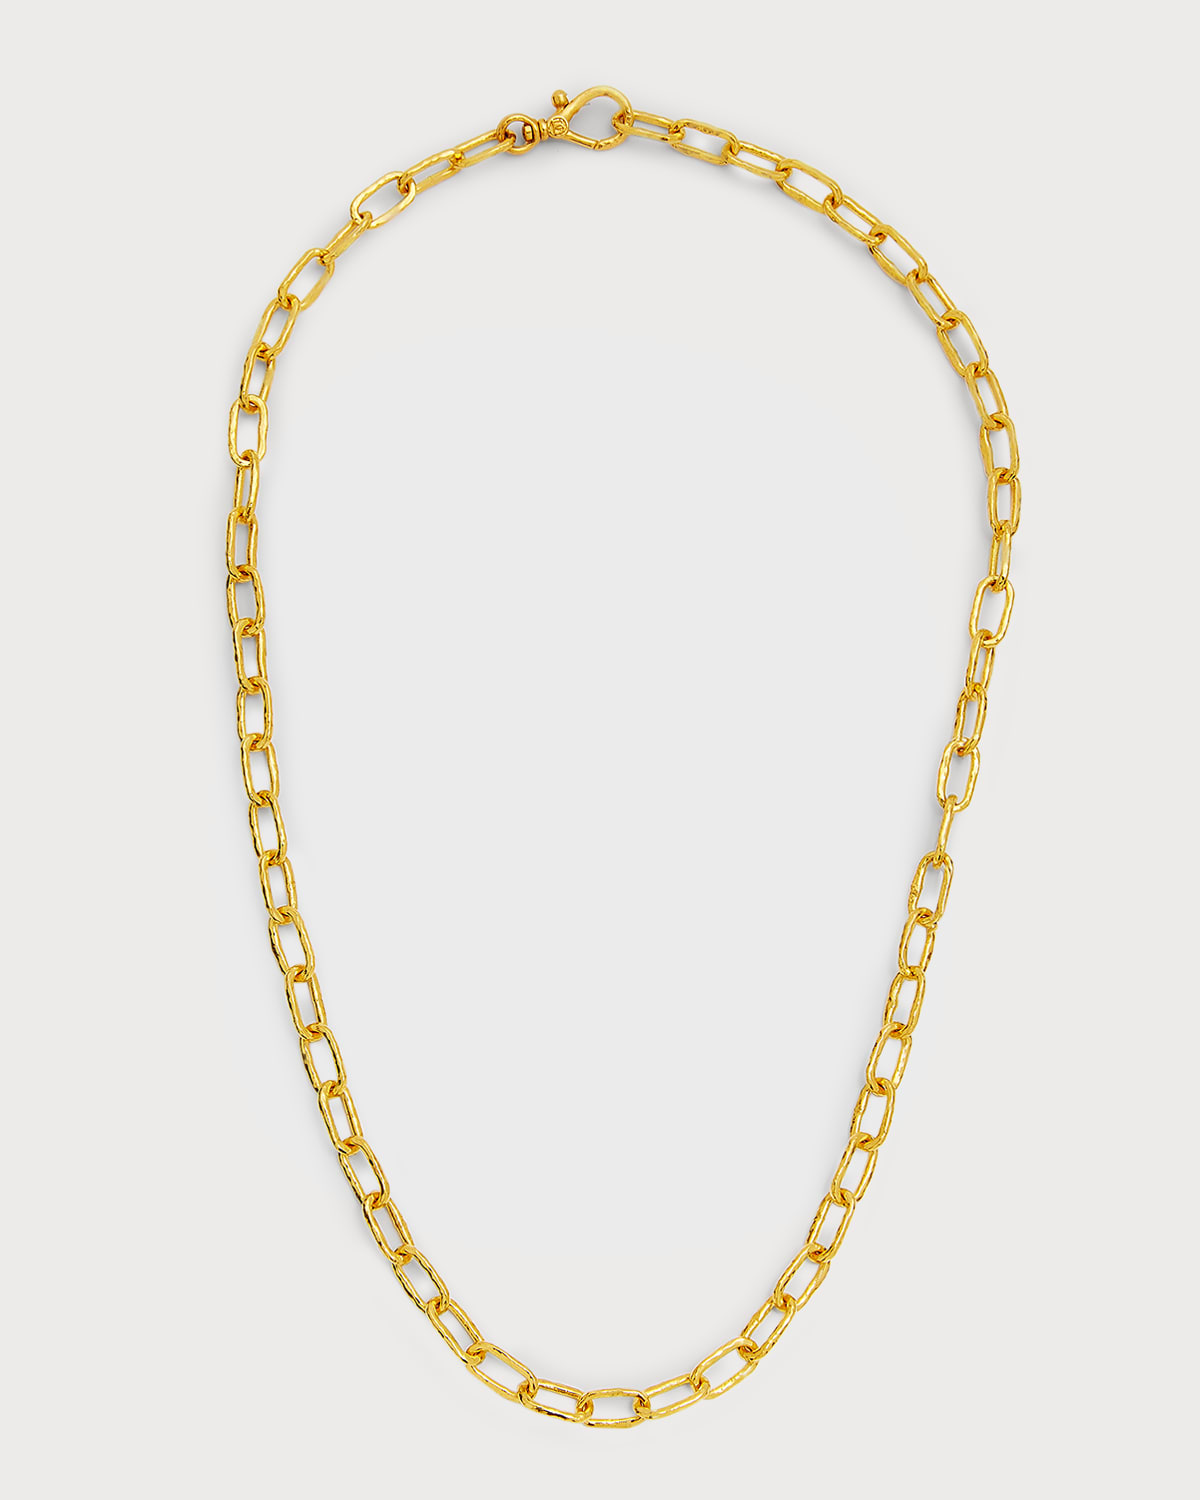 Gurhan Men's 24K Yellow Gold Cable Chain Necklace, 20"L